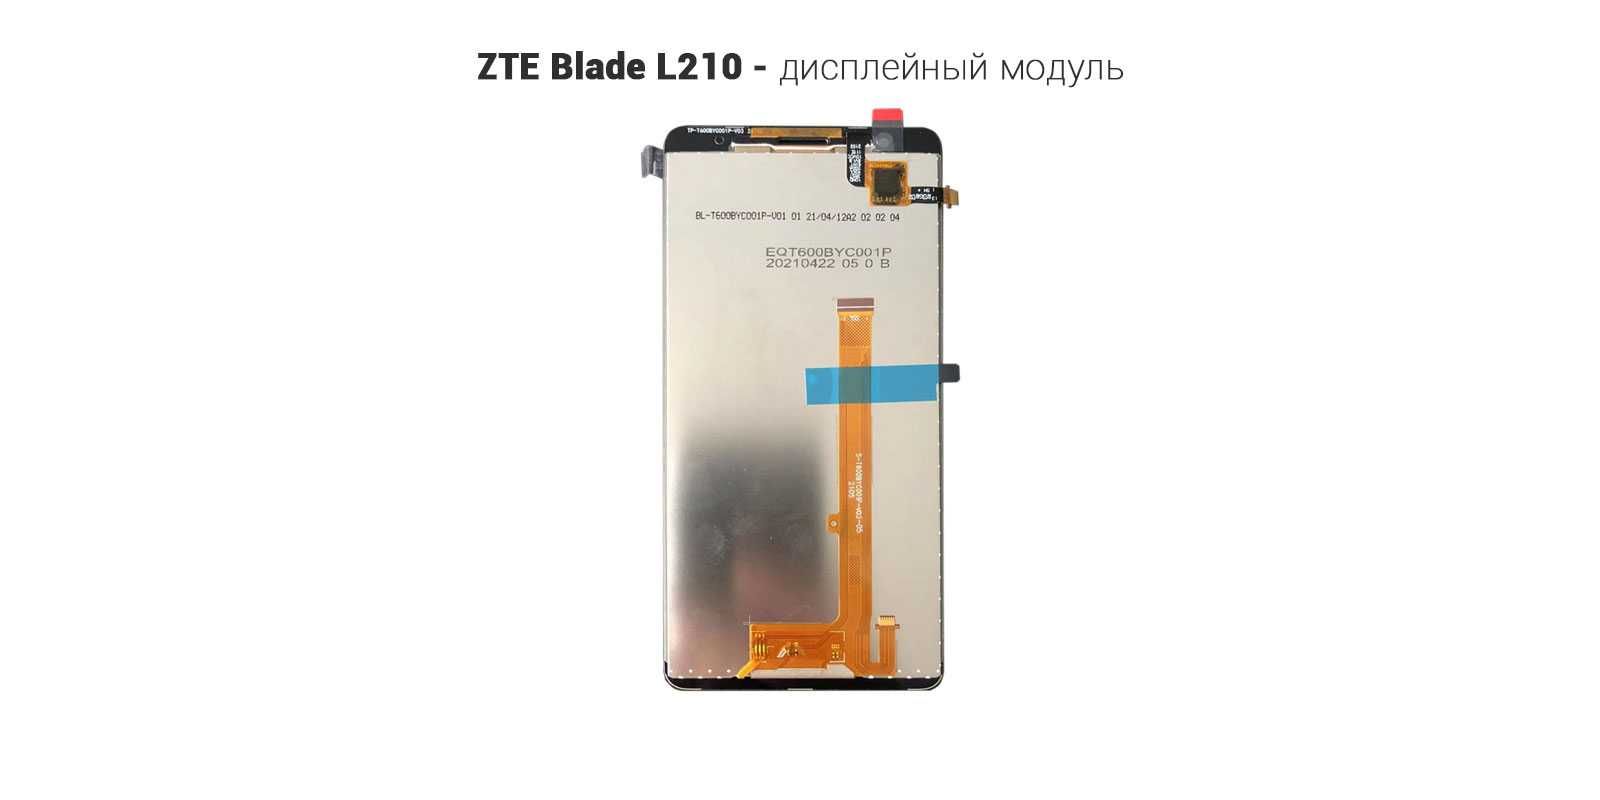 ZTE Blade L210 / A31 plus - дисплейный модуль  экран + тачскрин сенсор